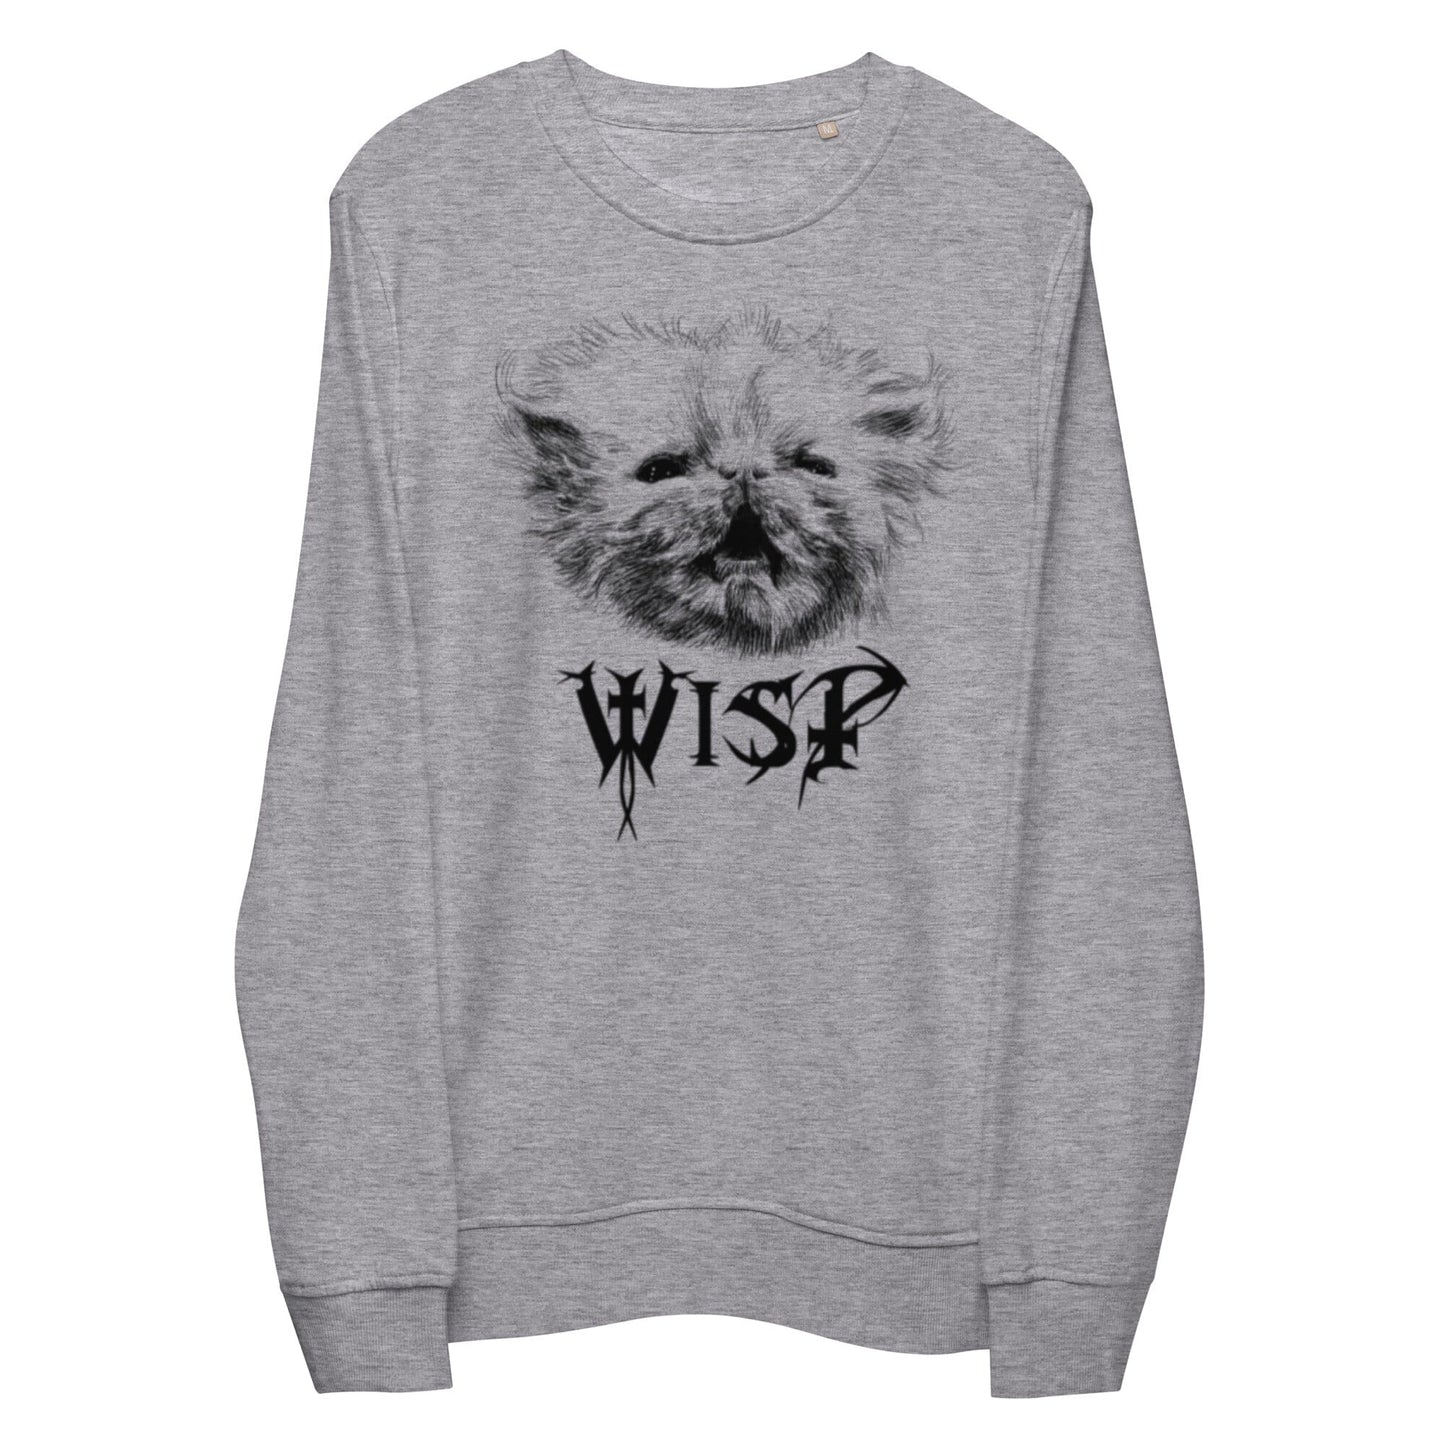 Metal Wisp Sweatshirt [Unfoiled] (All net proceeds go to Rags to Riches Animal Rescue) JoyousJoyfulJoyness Grey Melange S 